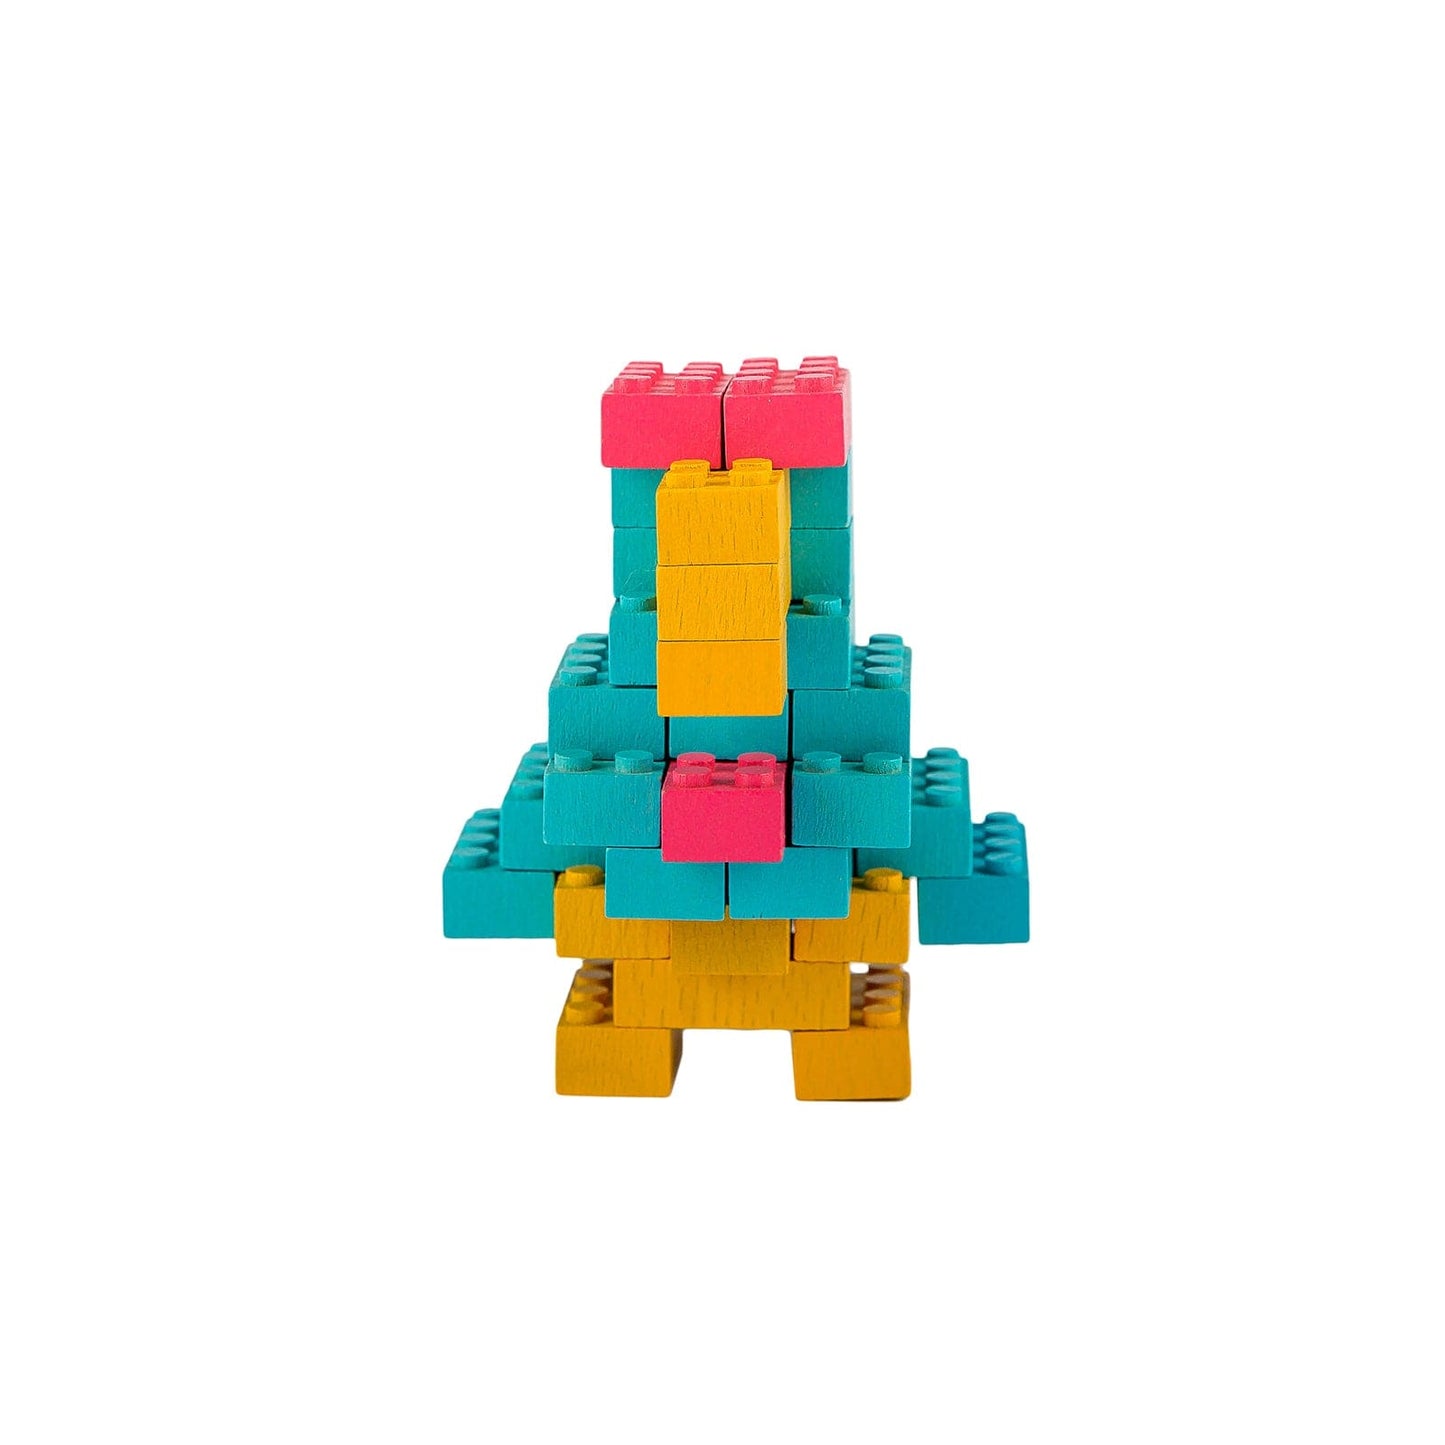 Once Kids Eco-bricks™ Color 54 Piece